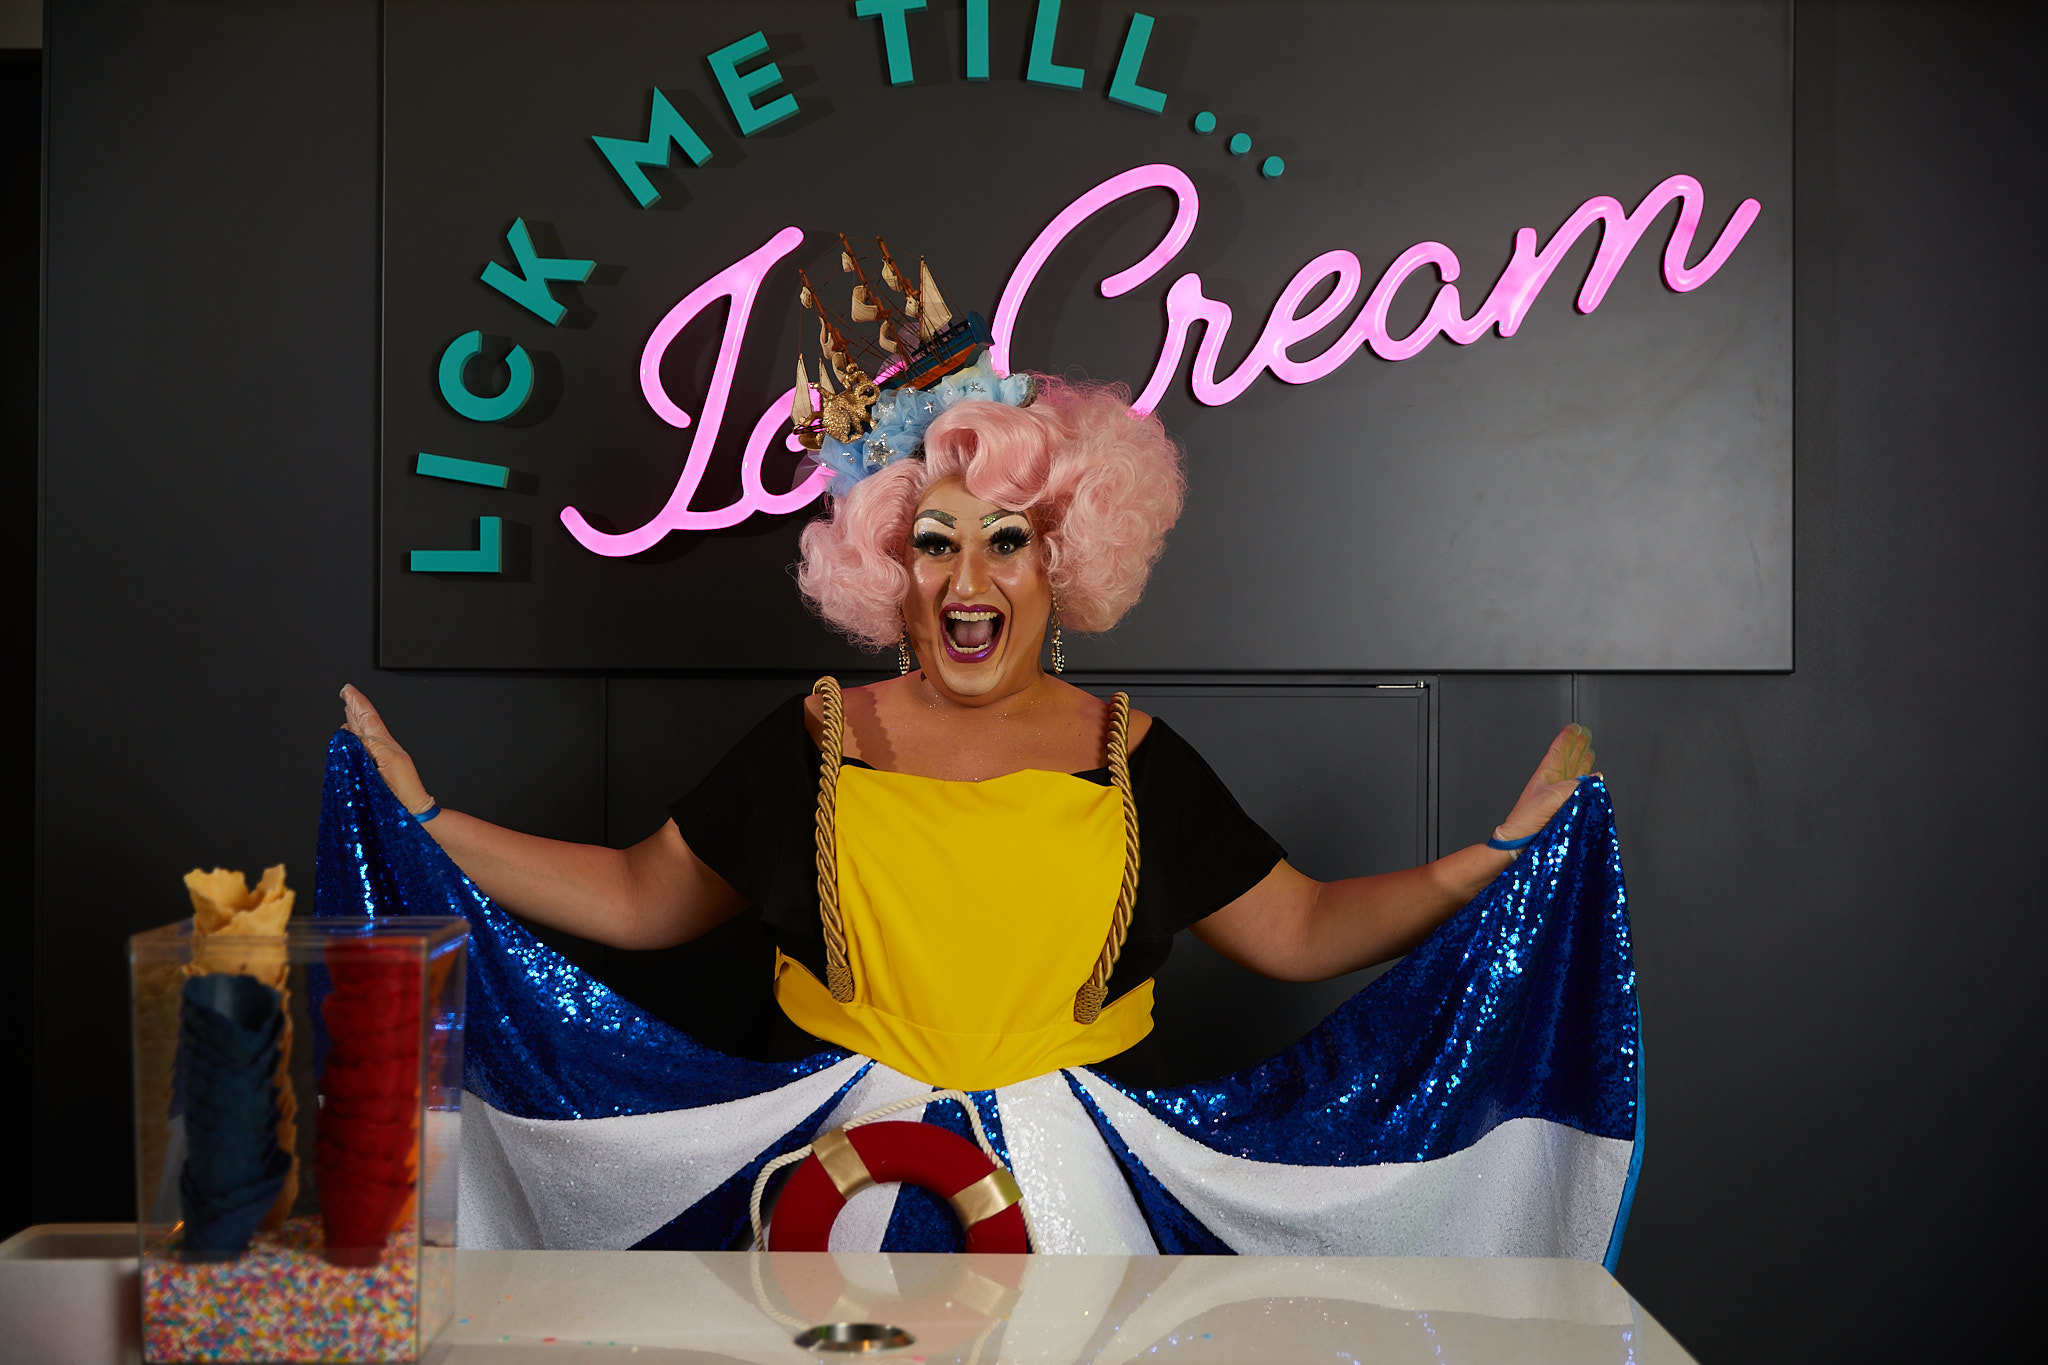 Lick Me Till Ice Cream